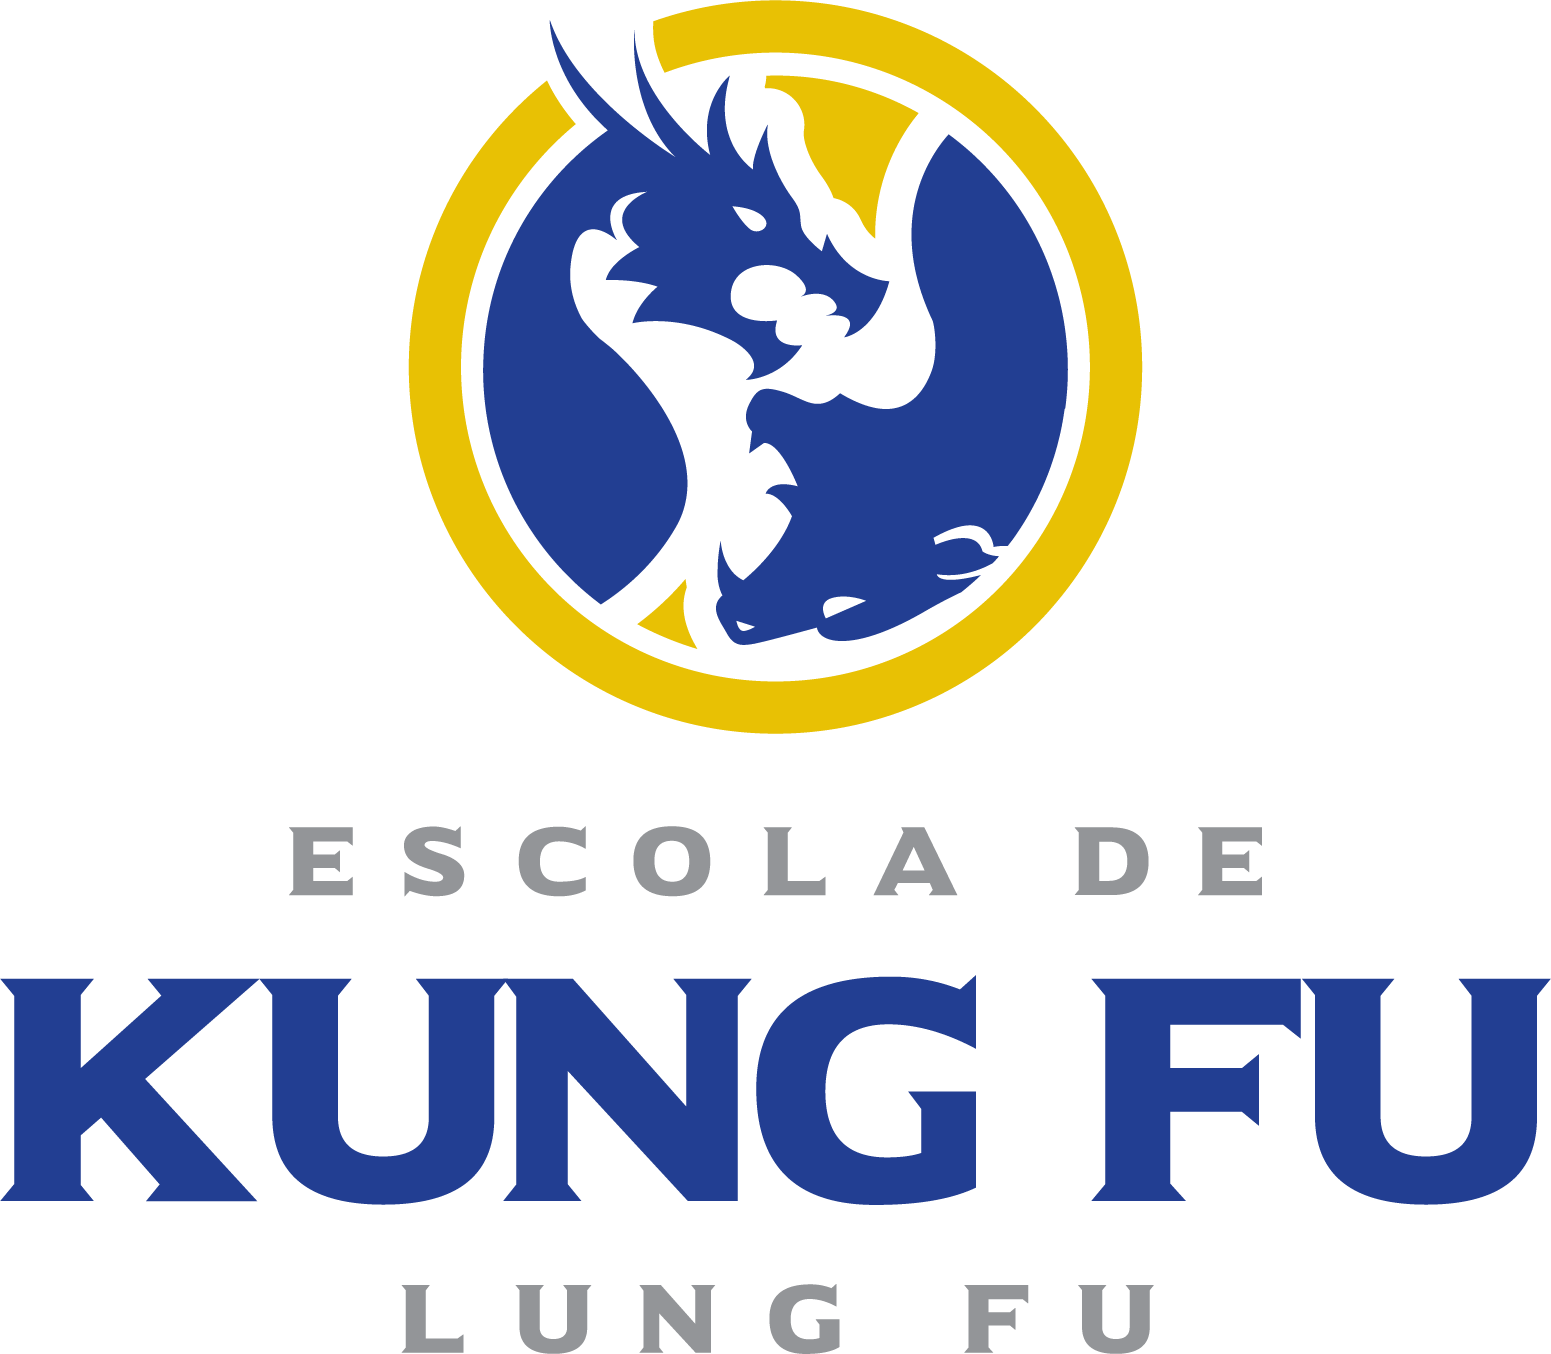 Escola de kung fu lung fu